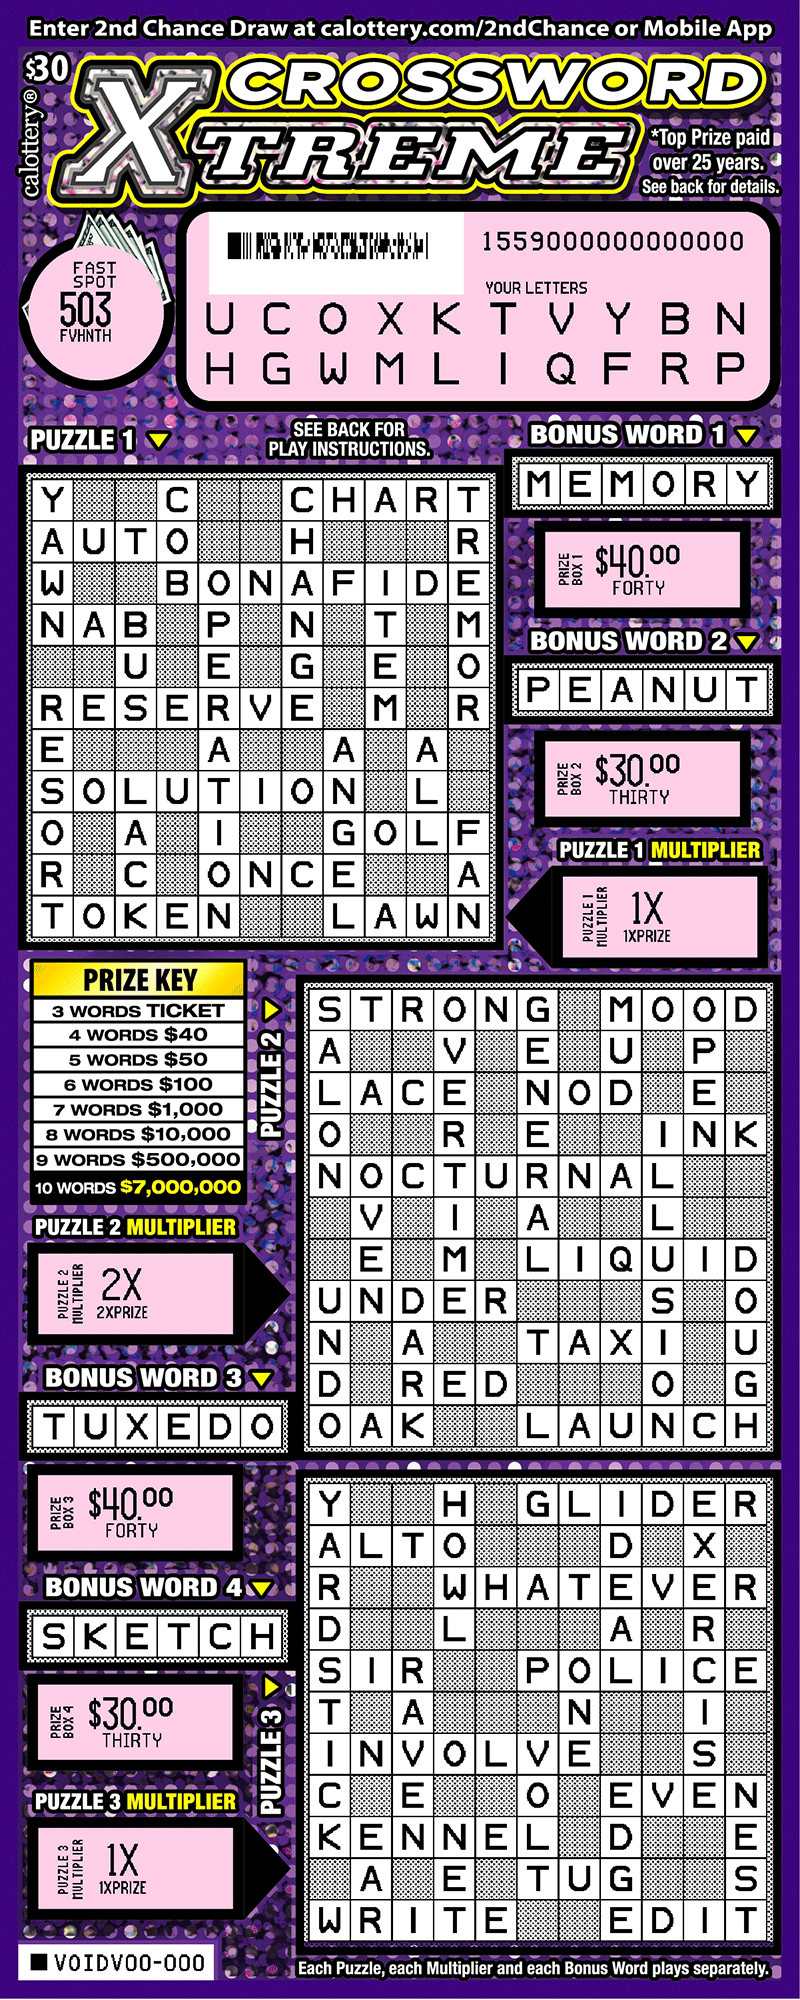 Crossword Part 1 ! Scratcher tool from the lotto queens @Game